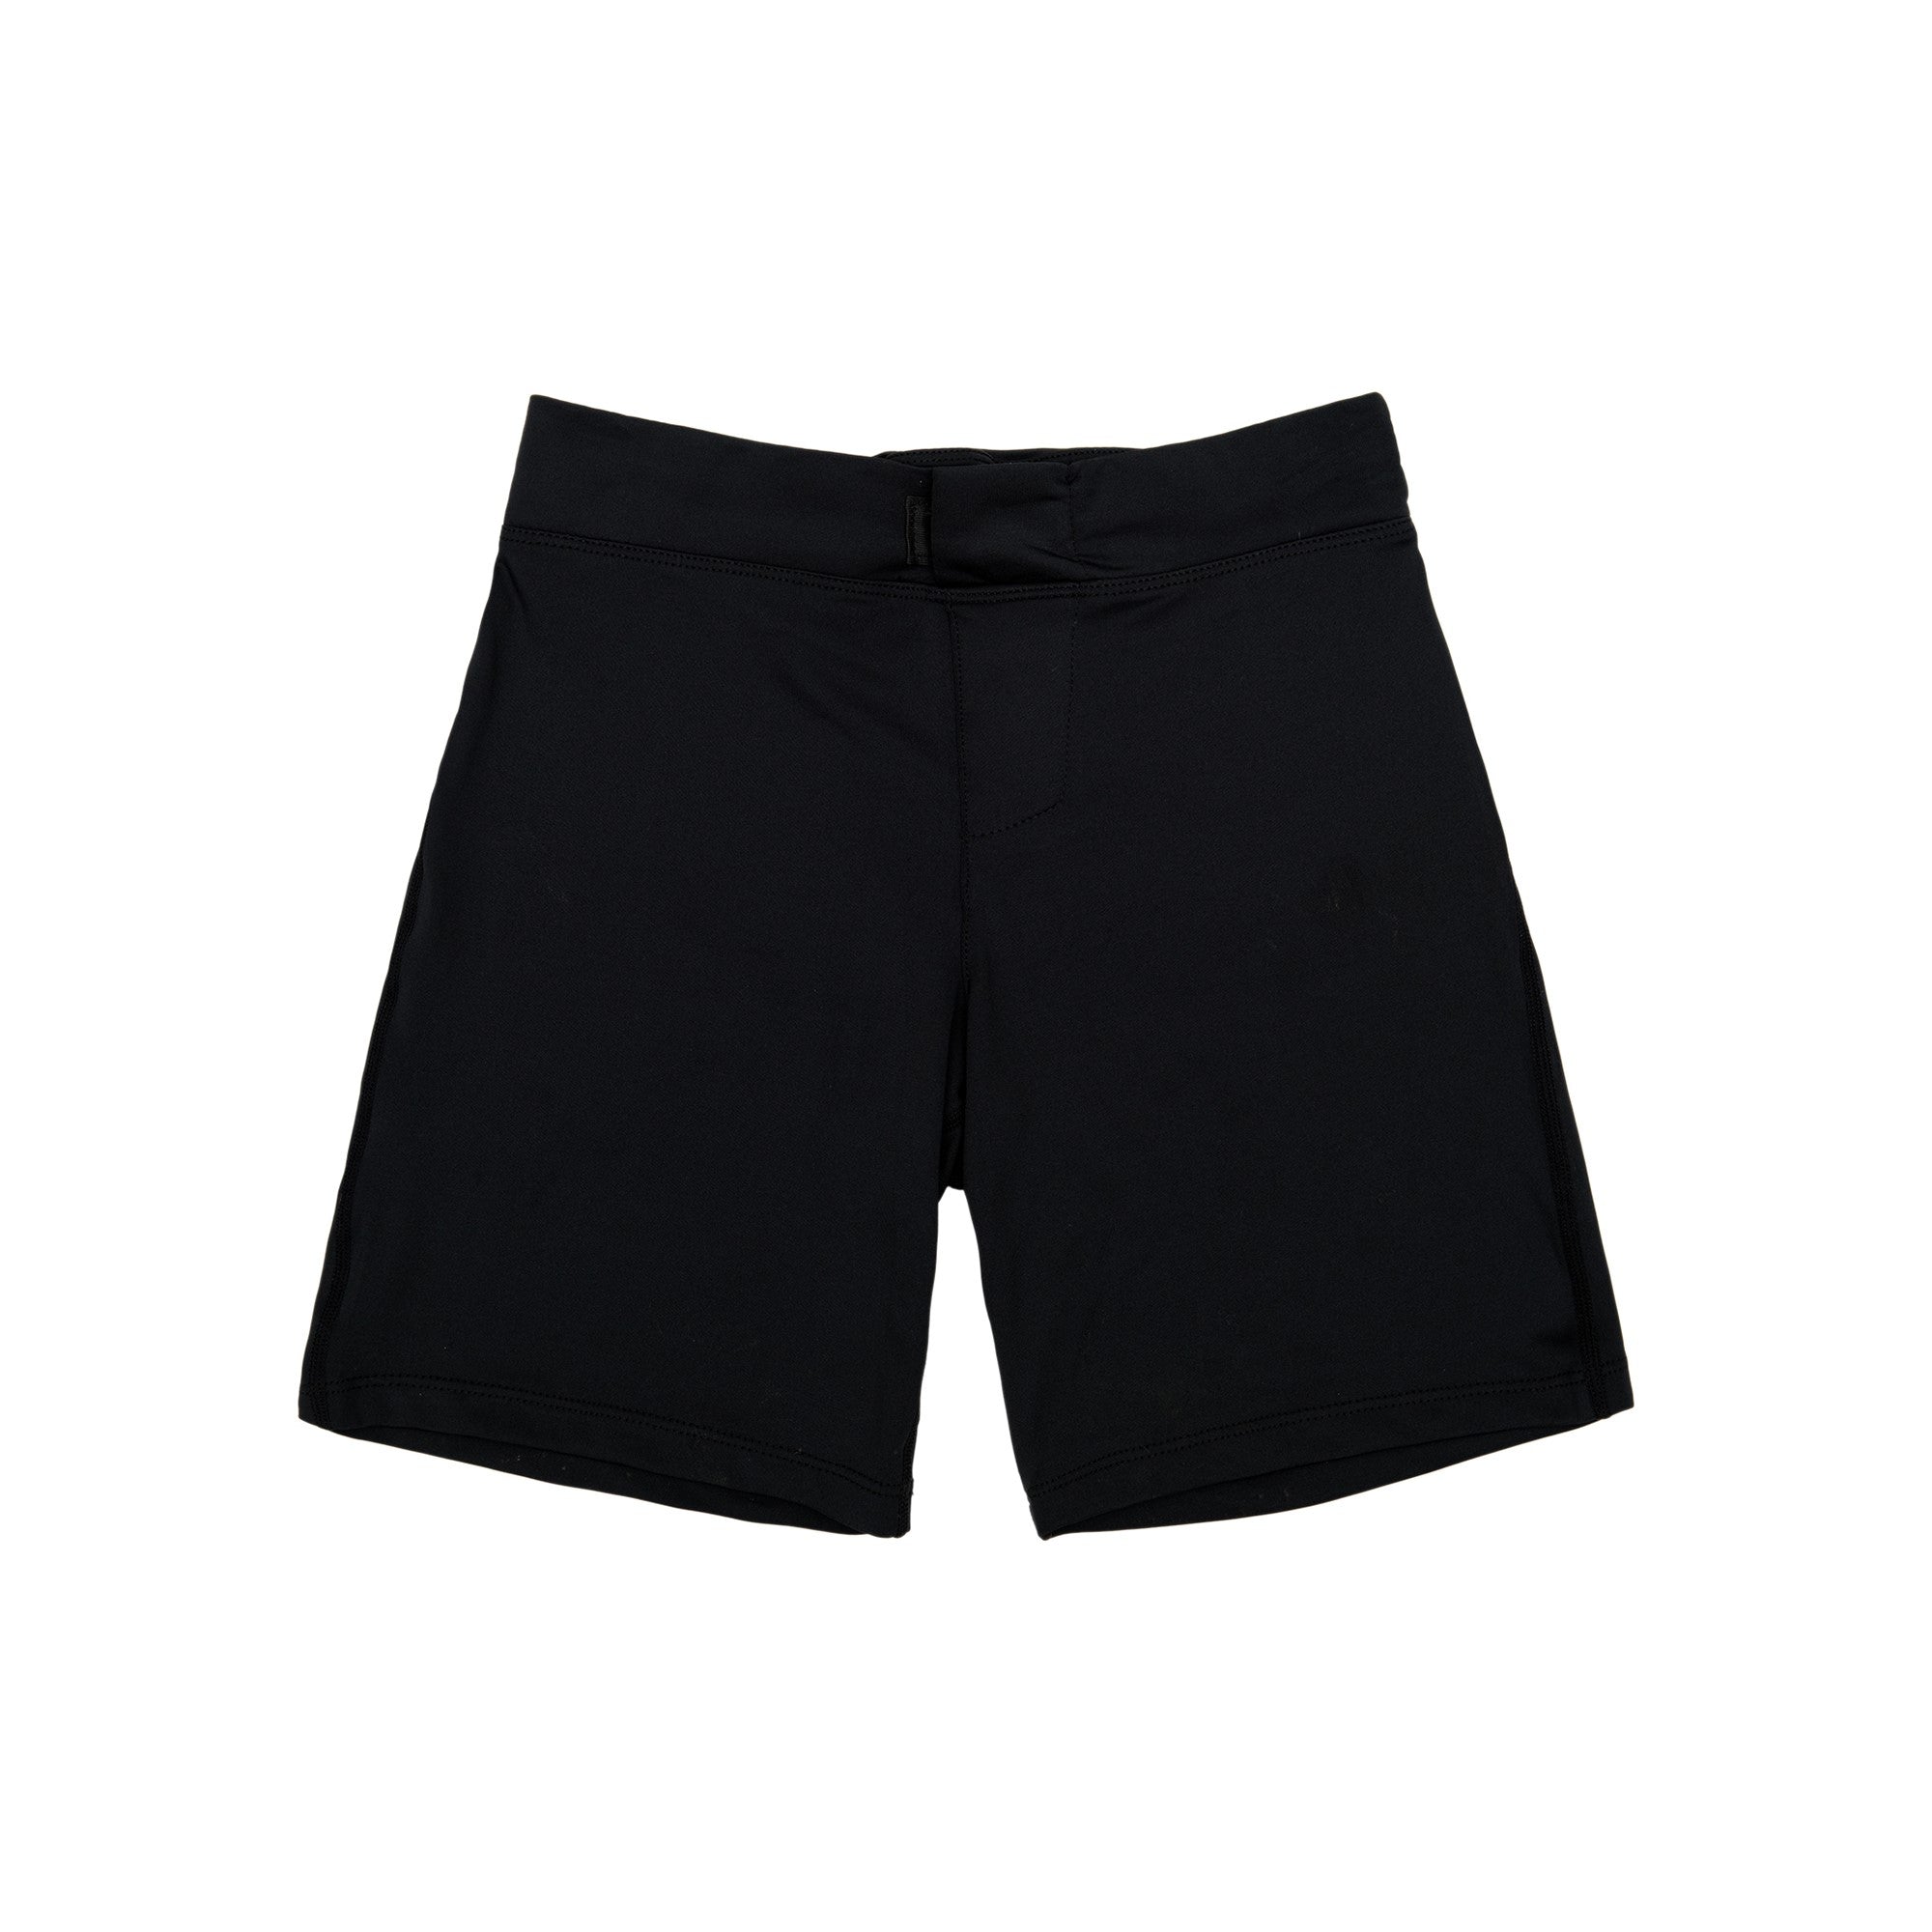 Sun Protection/Swim Shorts - Stonz